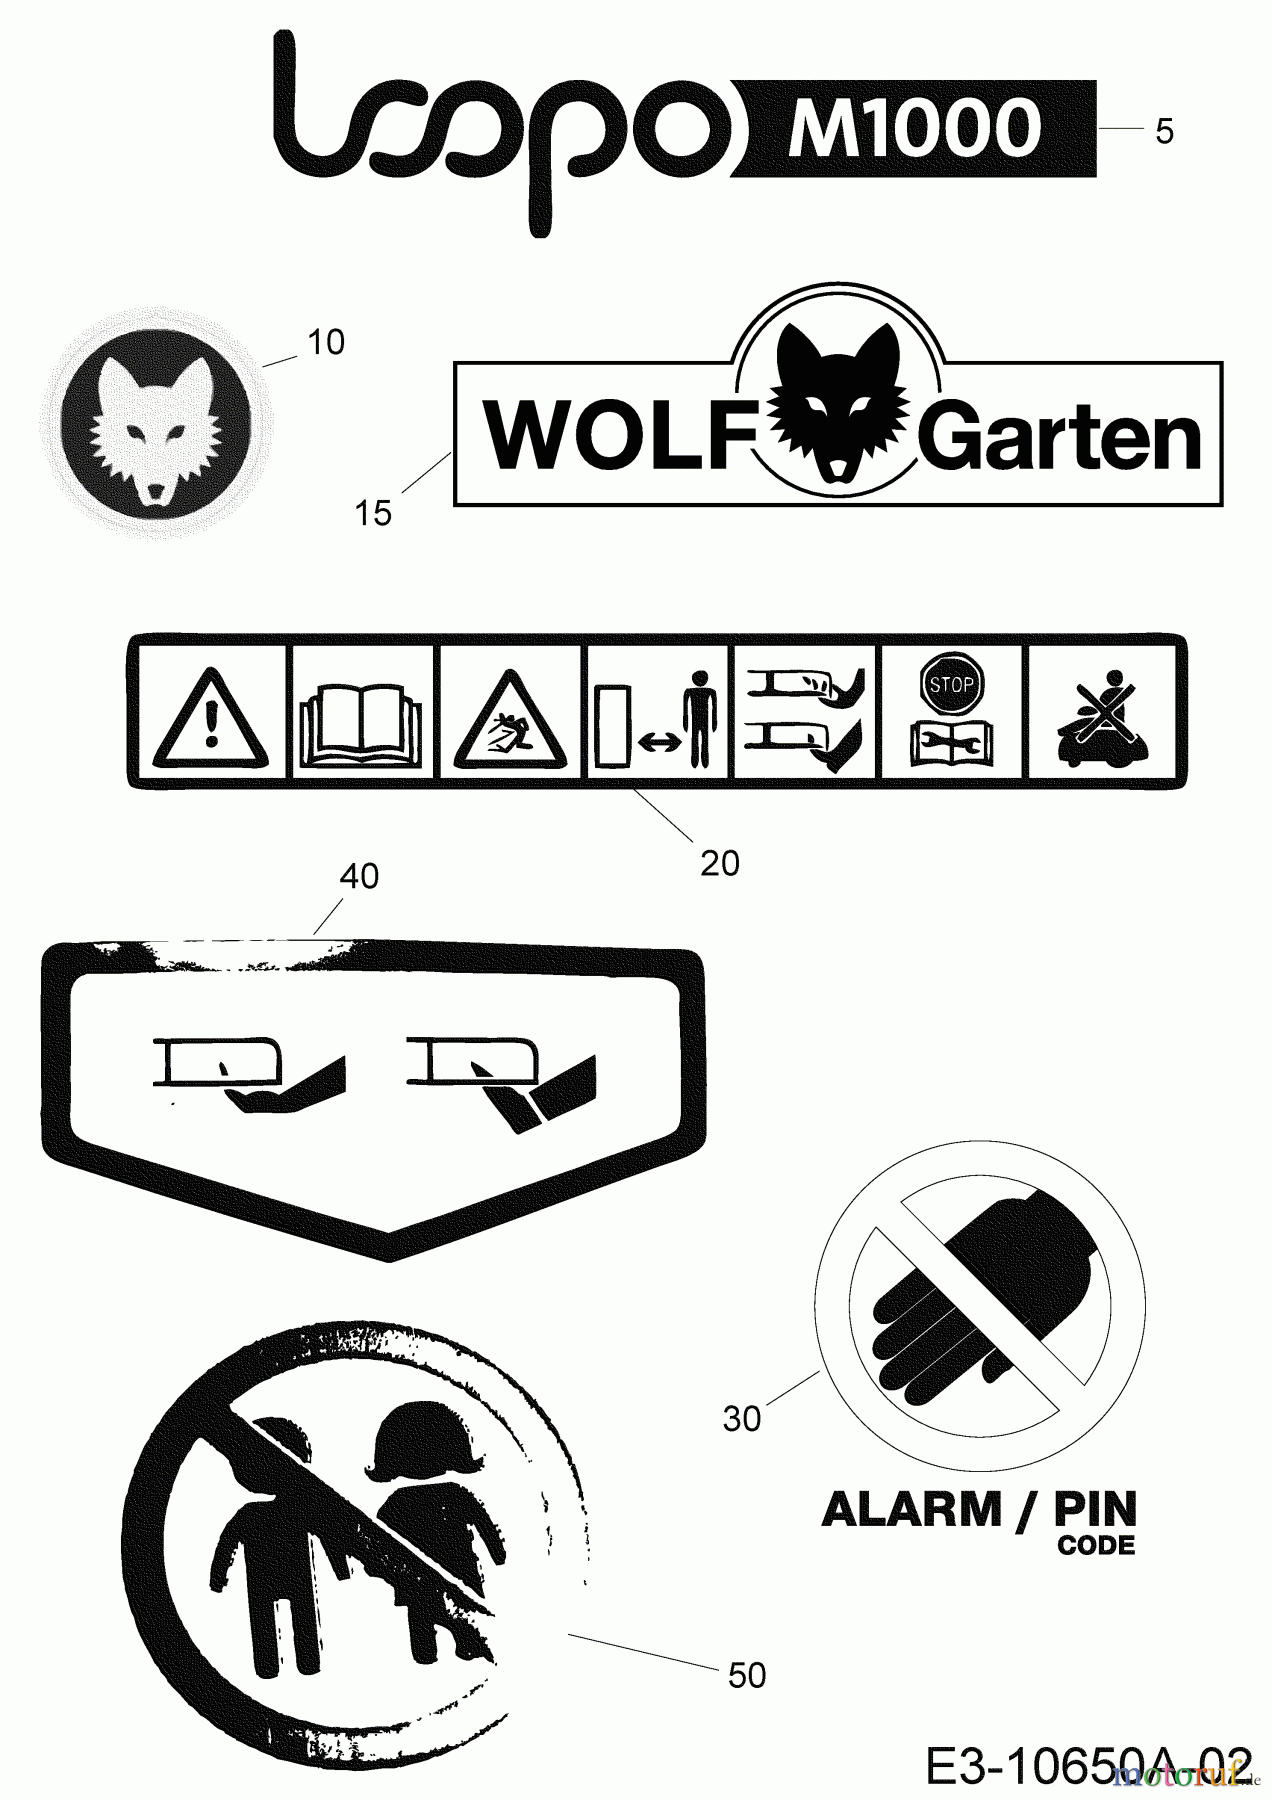  Wolf-Garten Robotic lawn mower Loopo M1000 22BCBA-A650  (2019) Labels